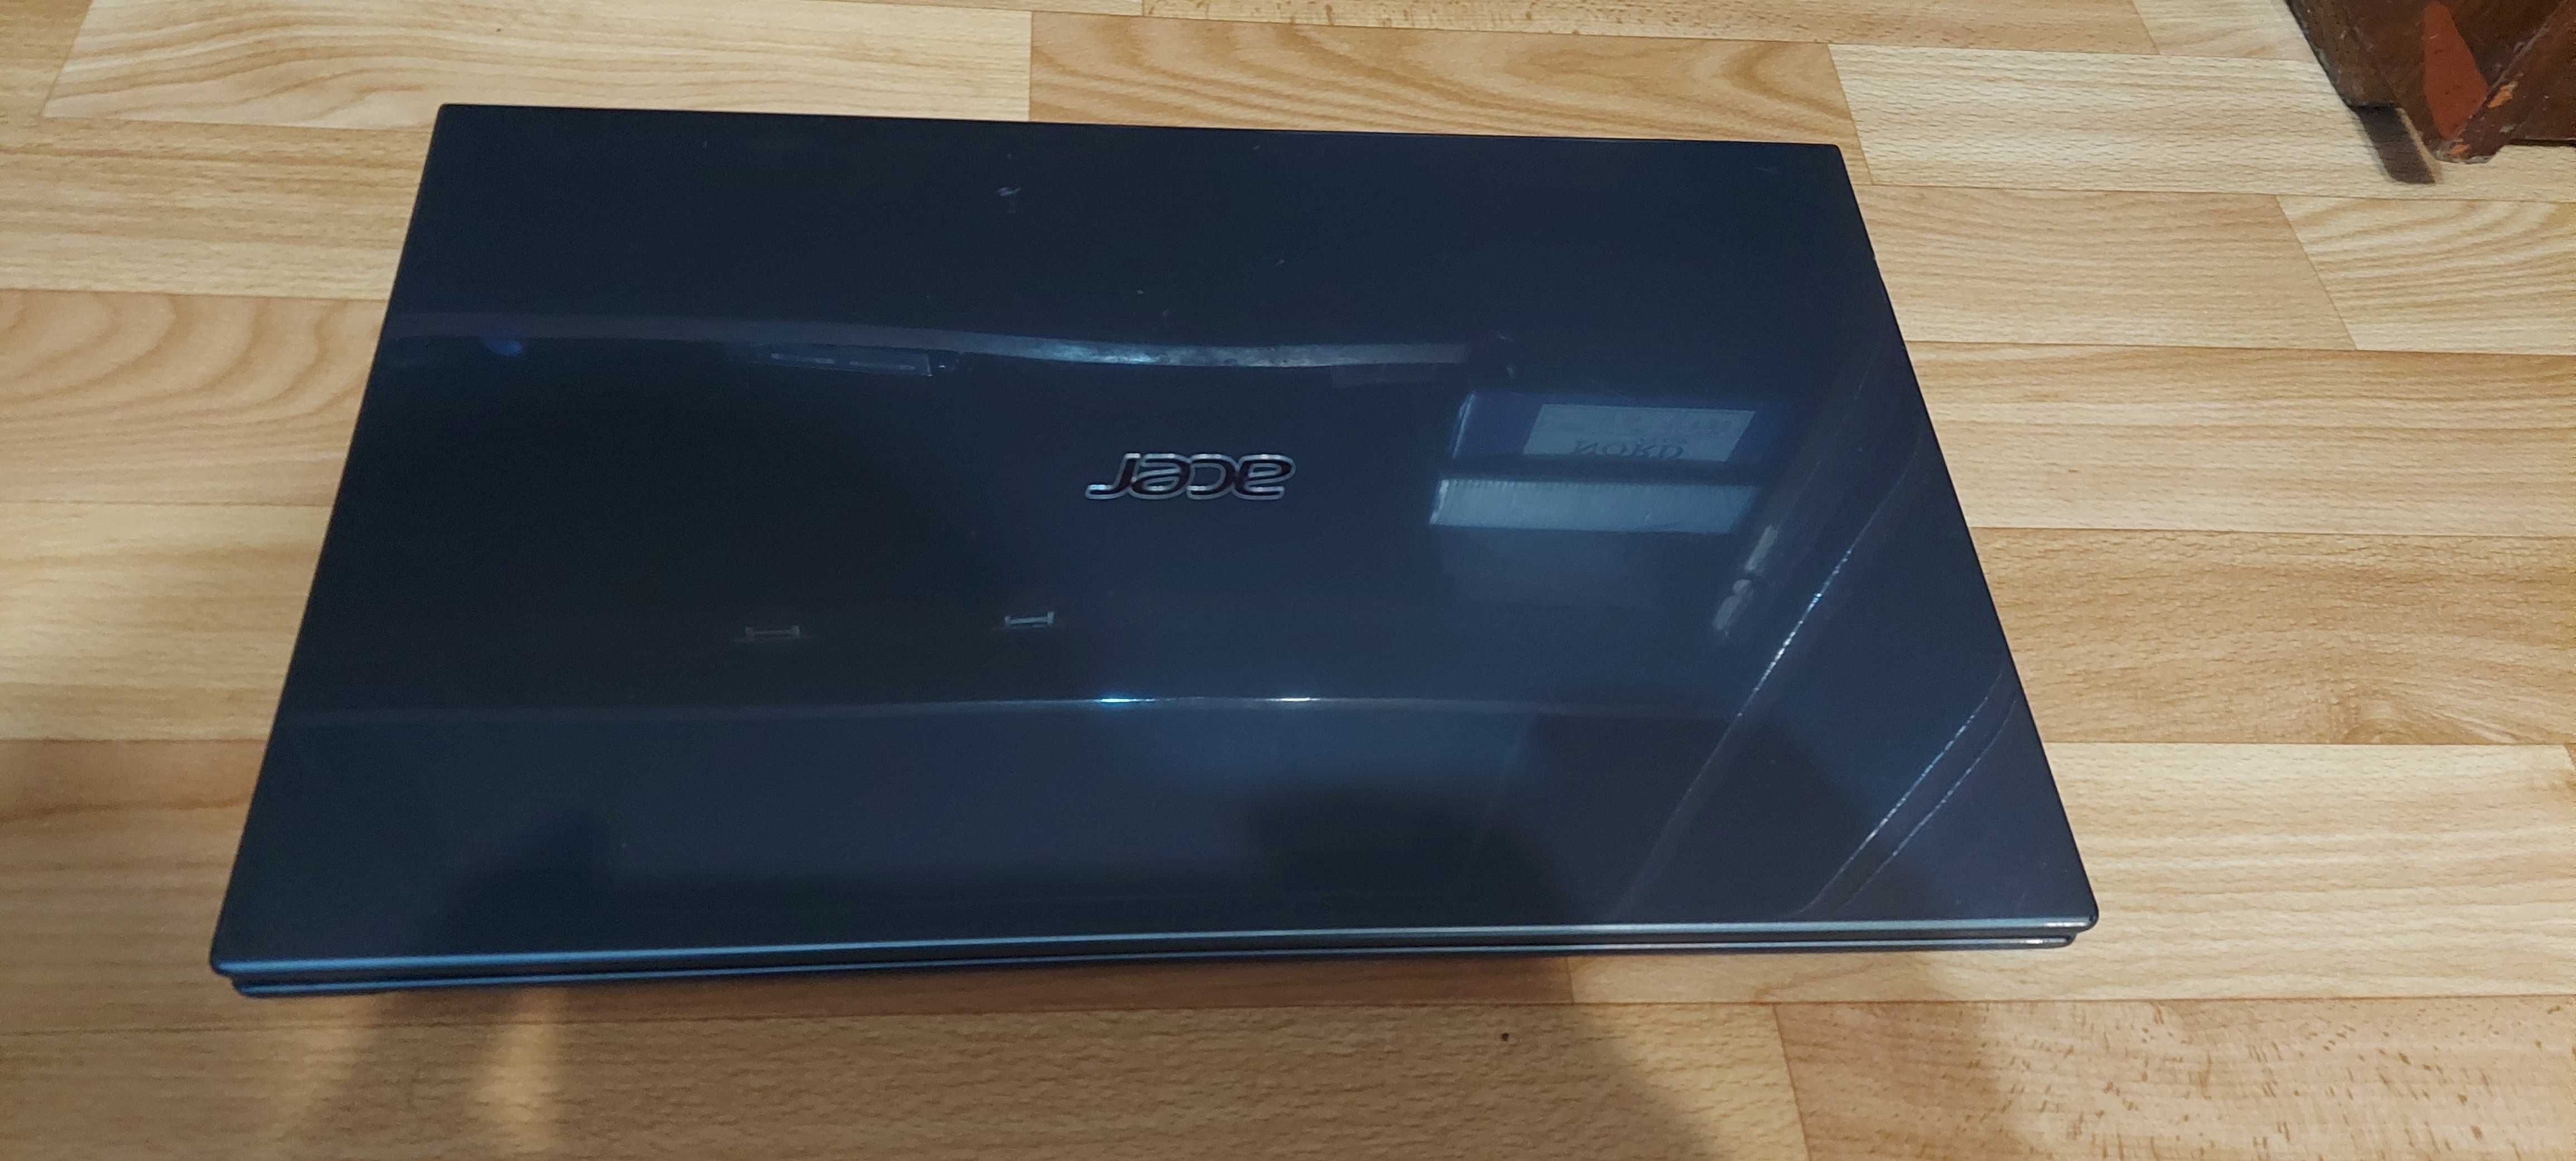 Ігровий ноутбук Acer v3-571 Grey Limited Edition